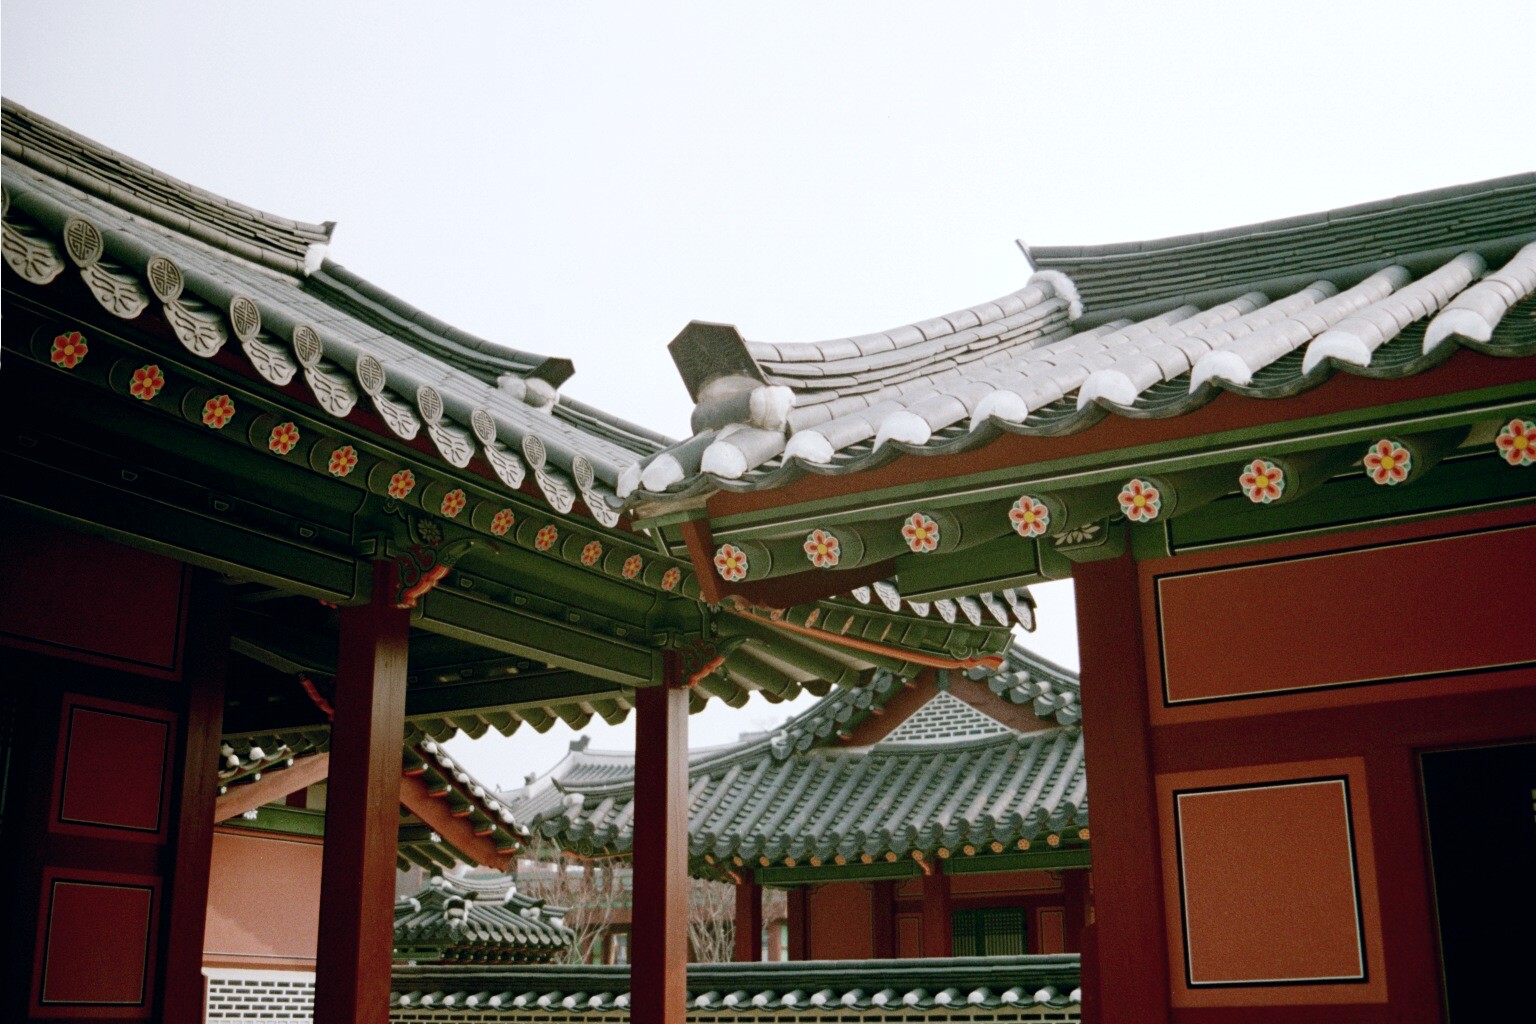 Korean Palace buildings